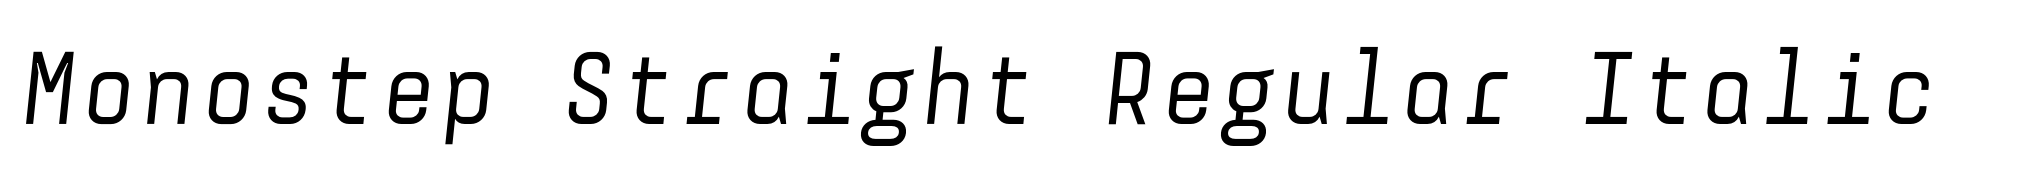 Monostep Straight Regular Italic image